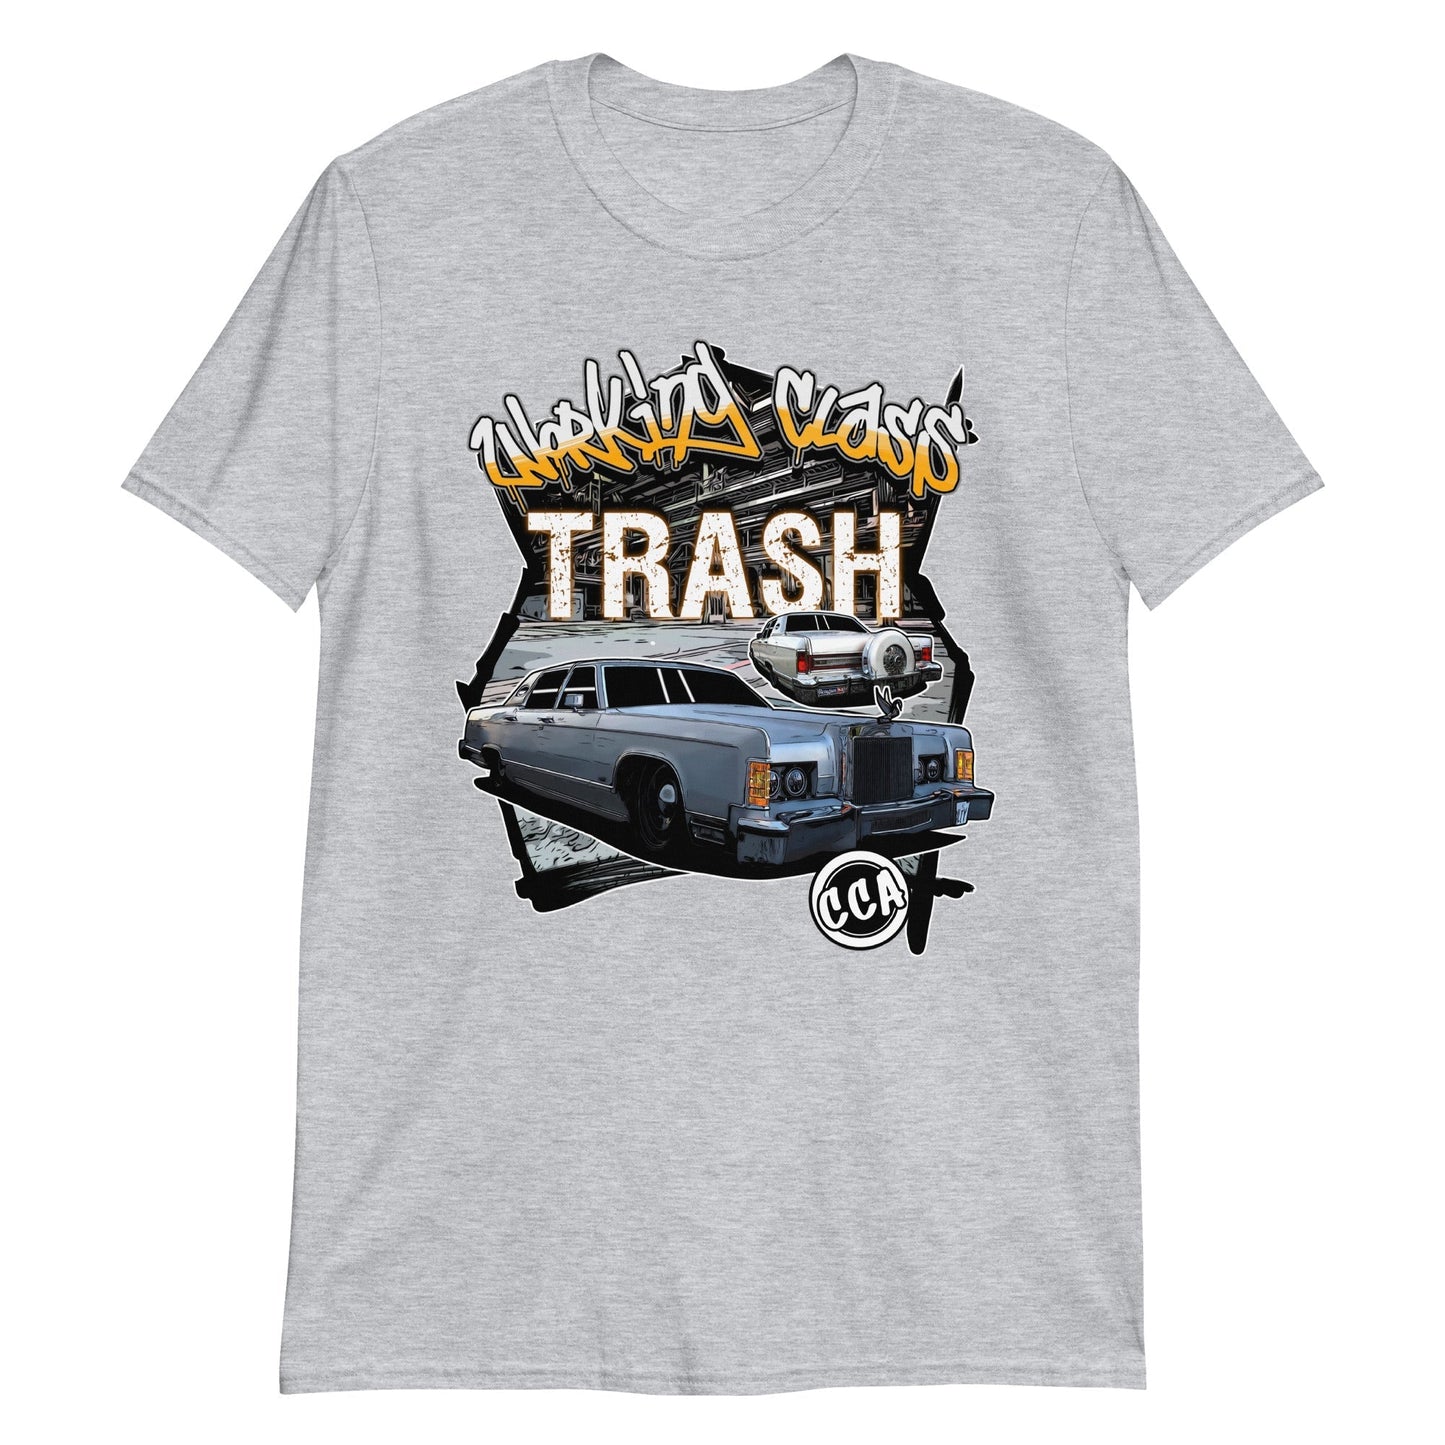 Working Class Trash T-Shirt Front